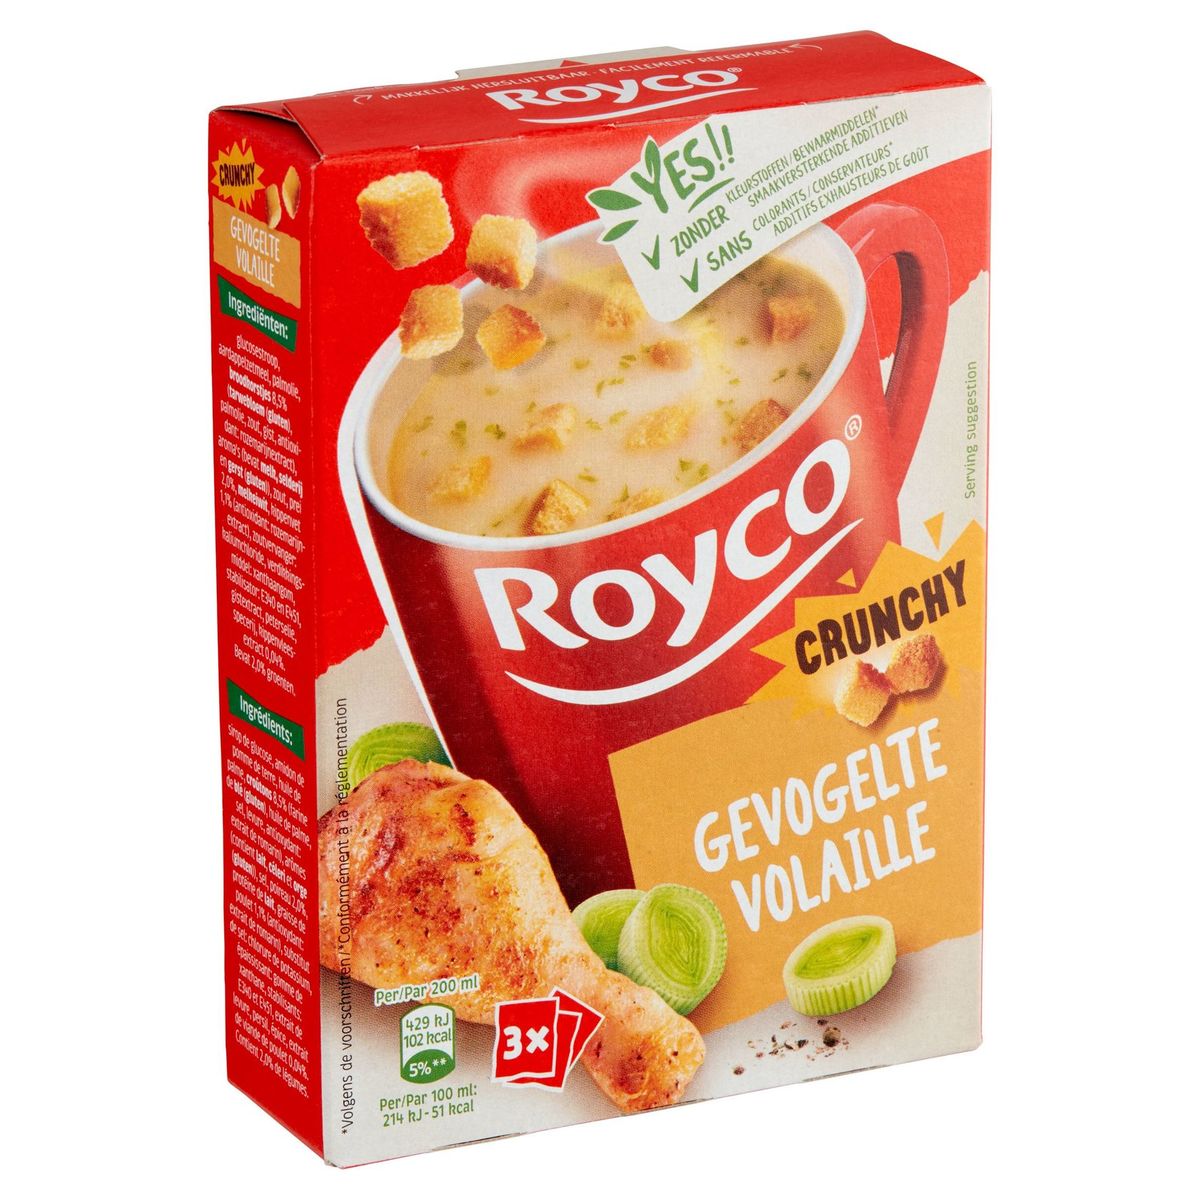 Royco Crunchy Gevogelte 3 x 20.5 g